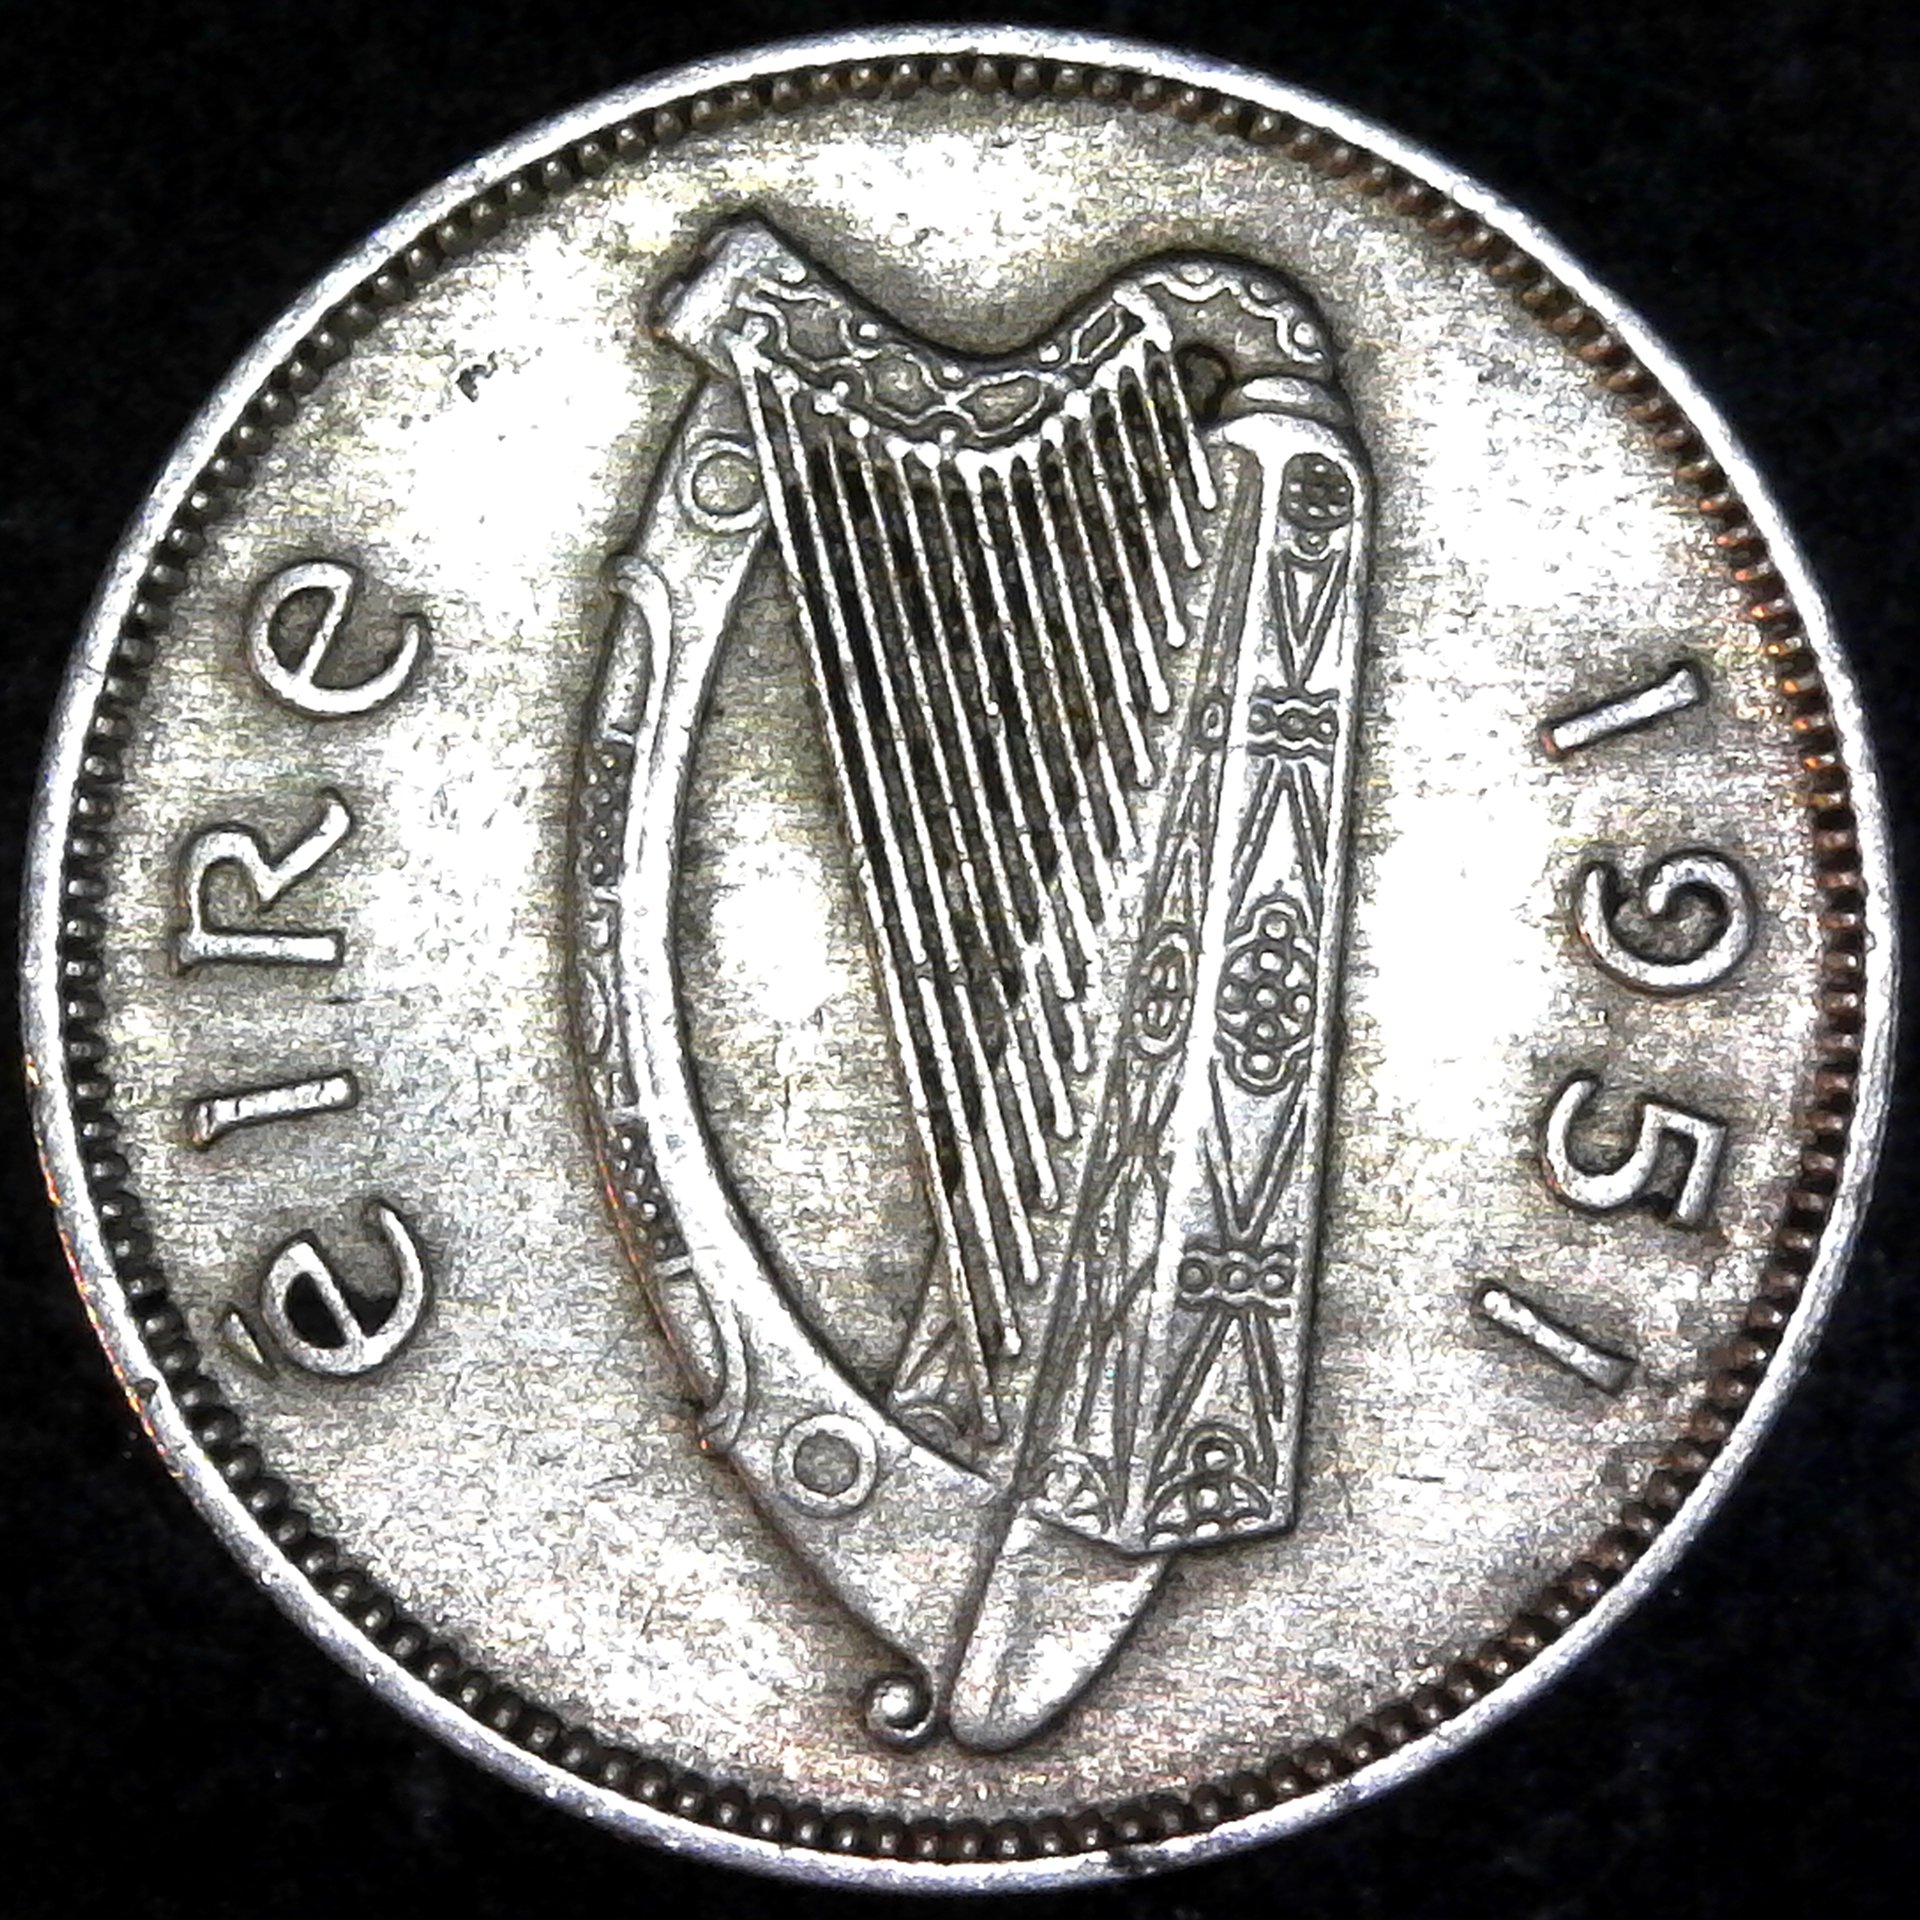 Ireland Shilling 1951 rev.jpg